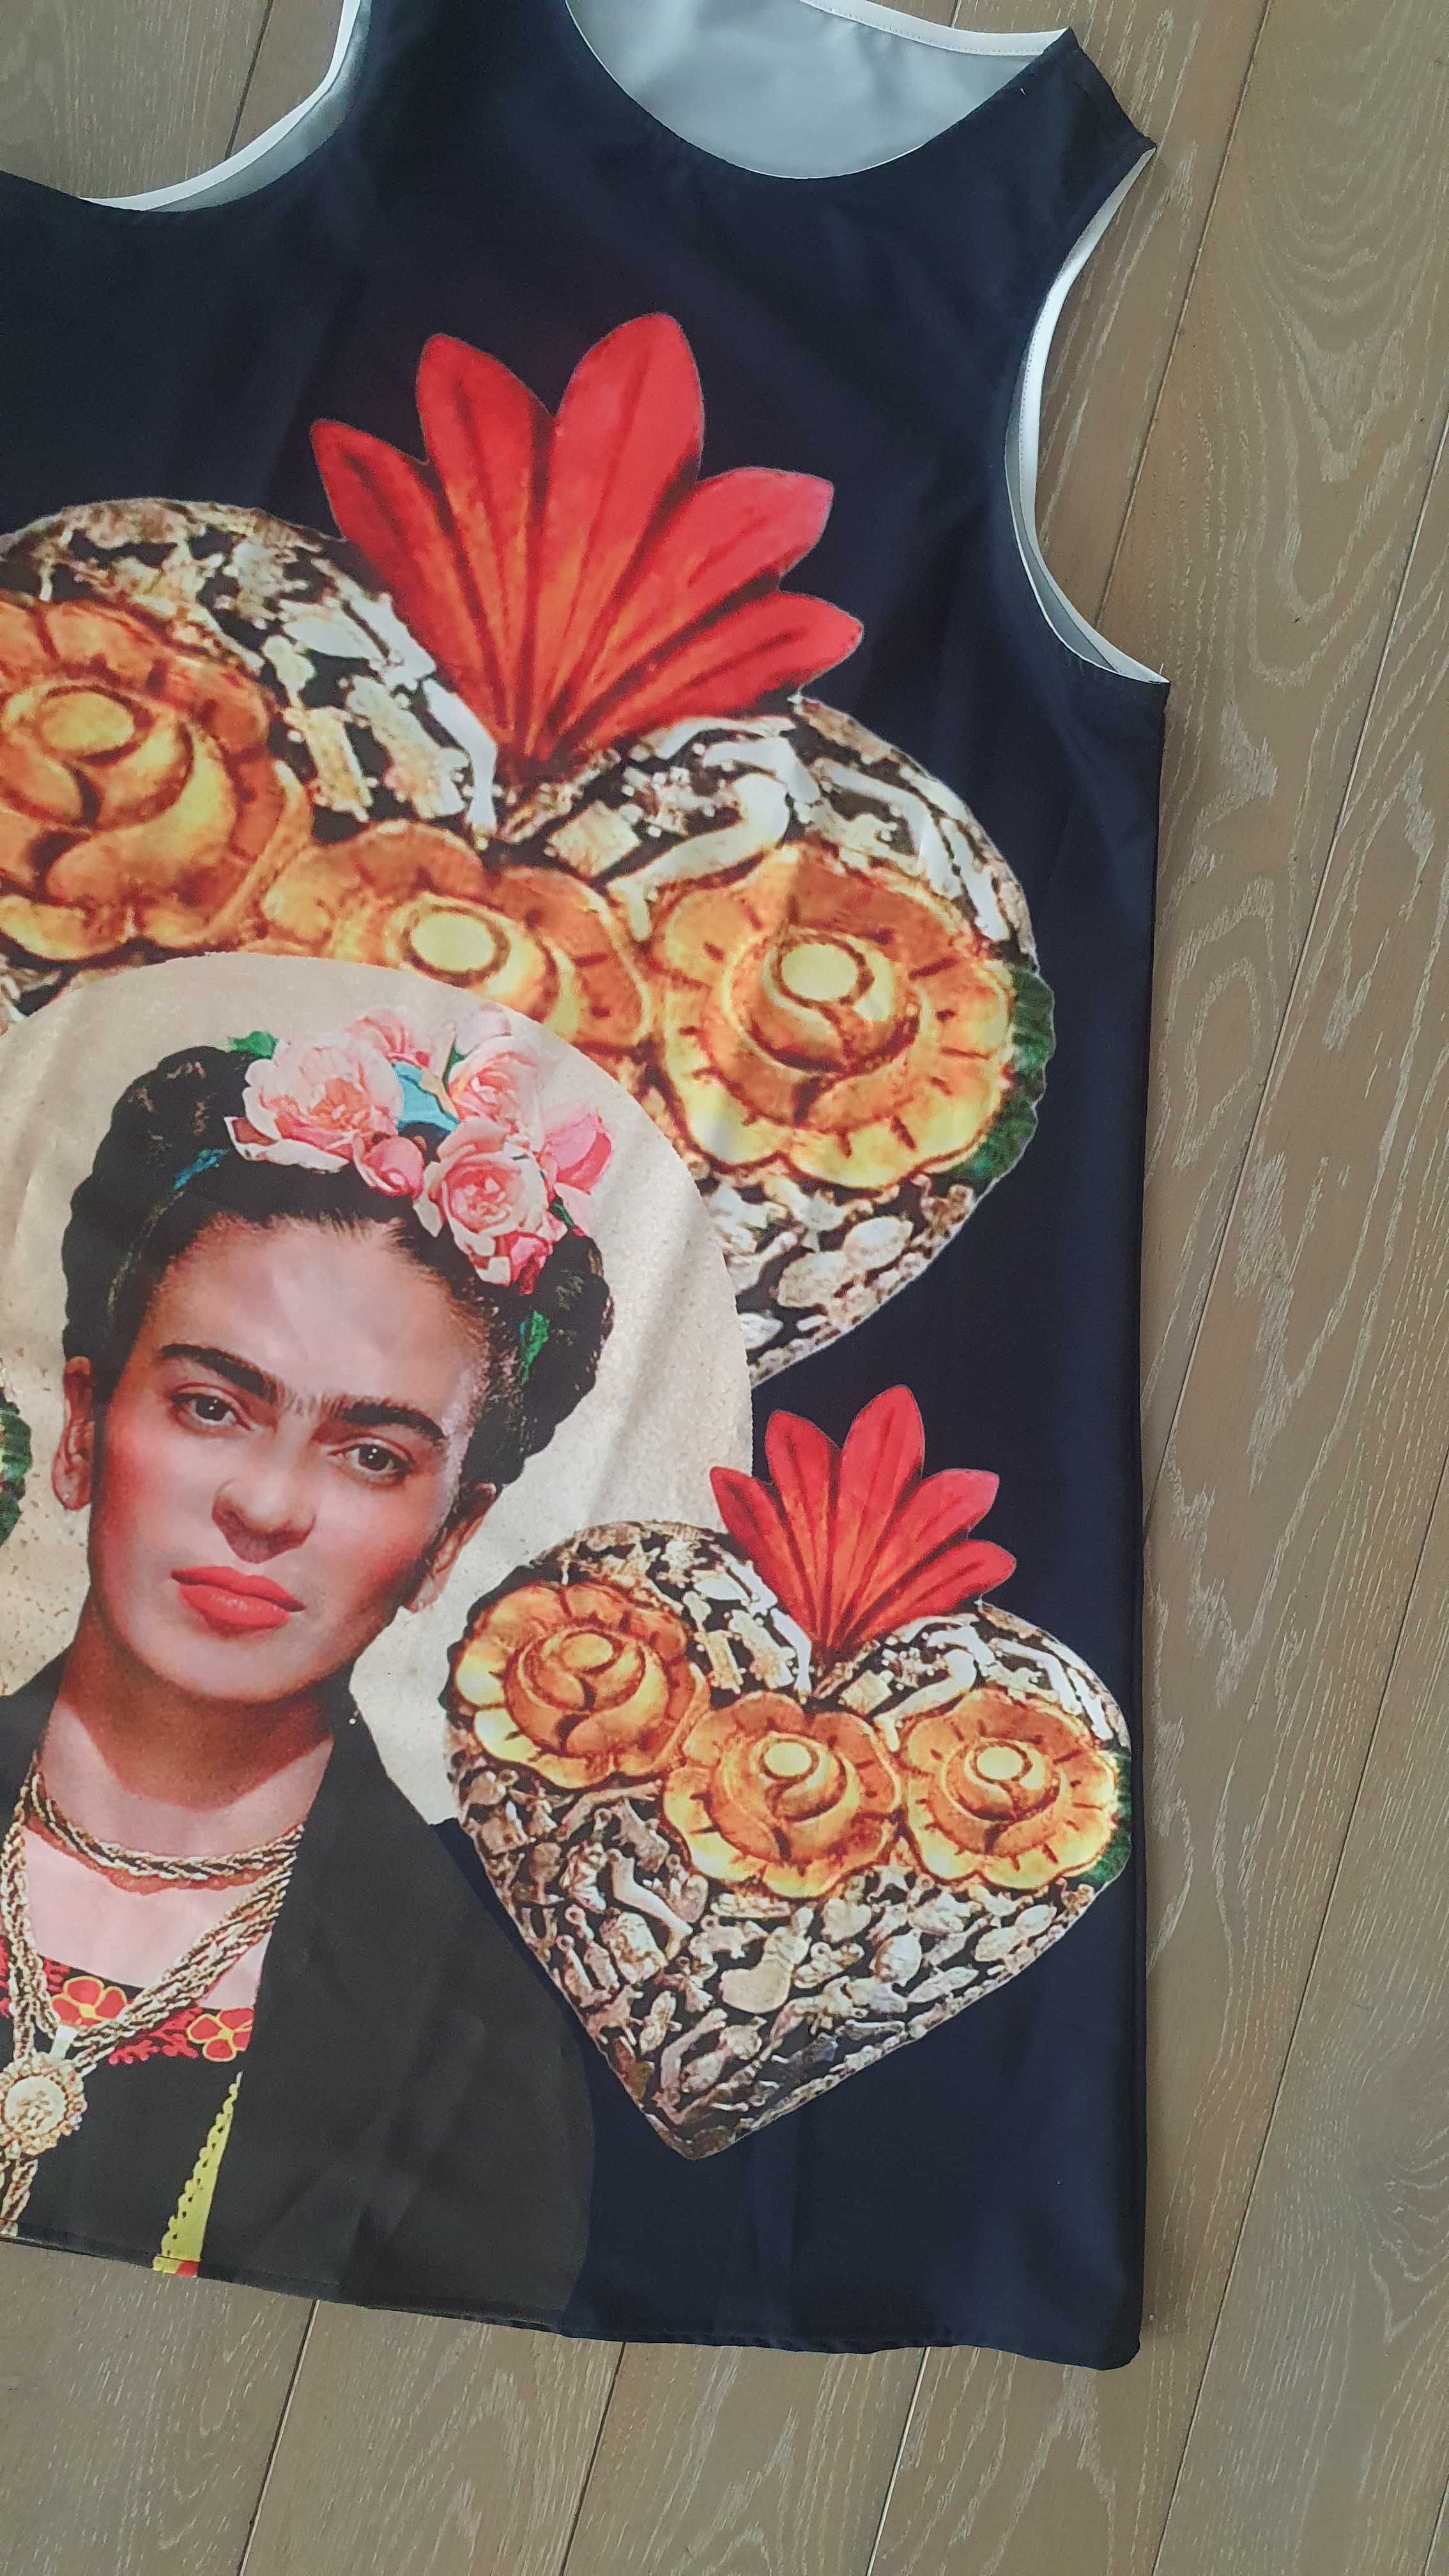 Sukienka Frida Kahlo